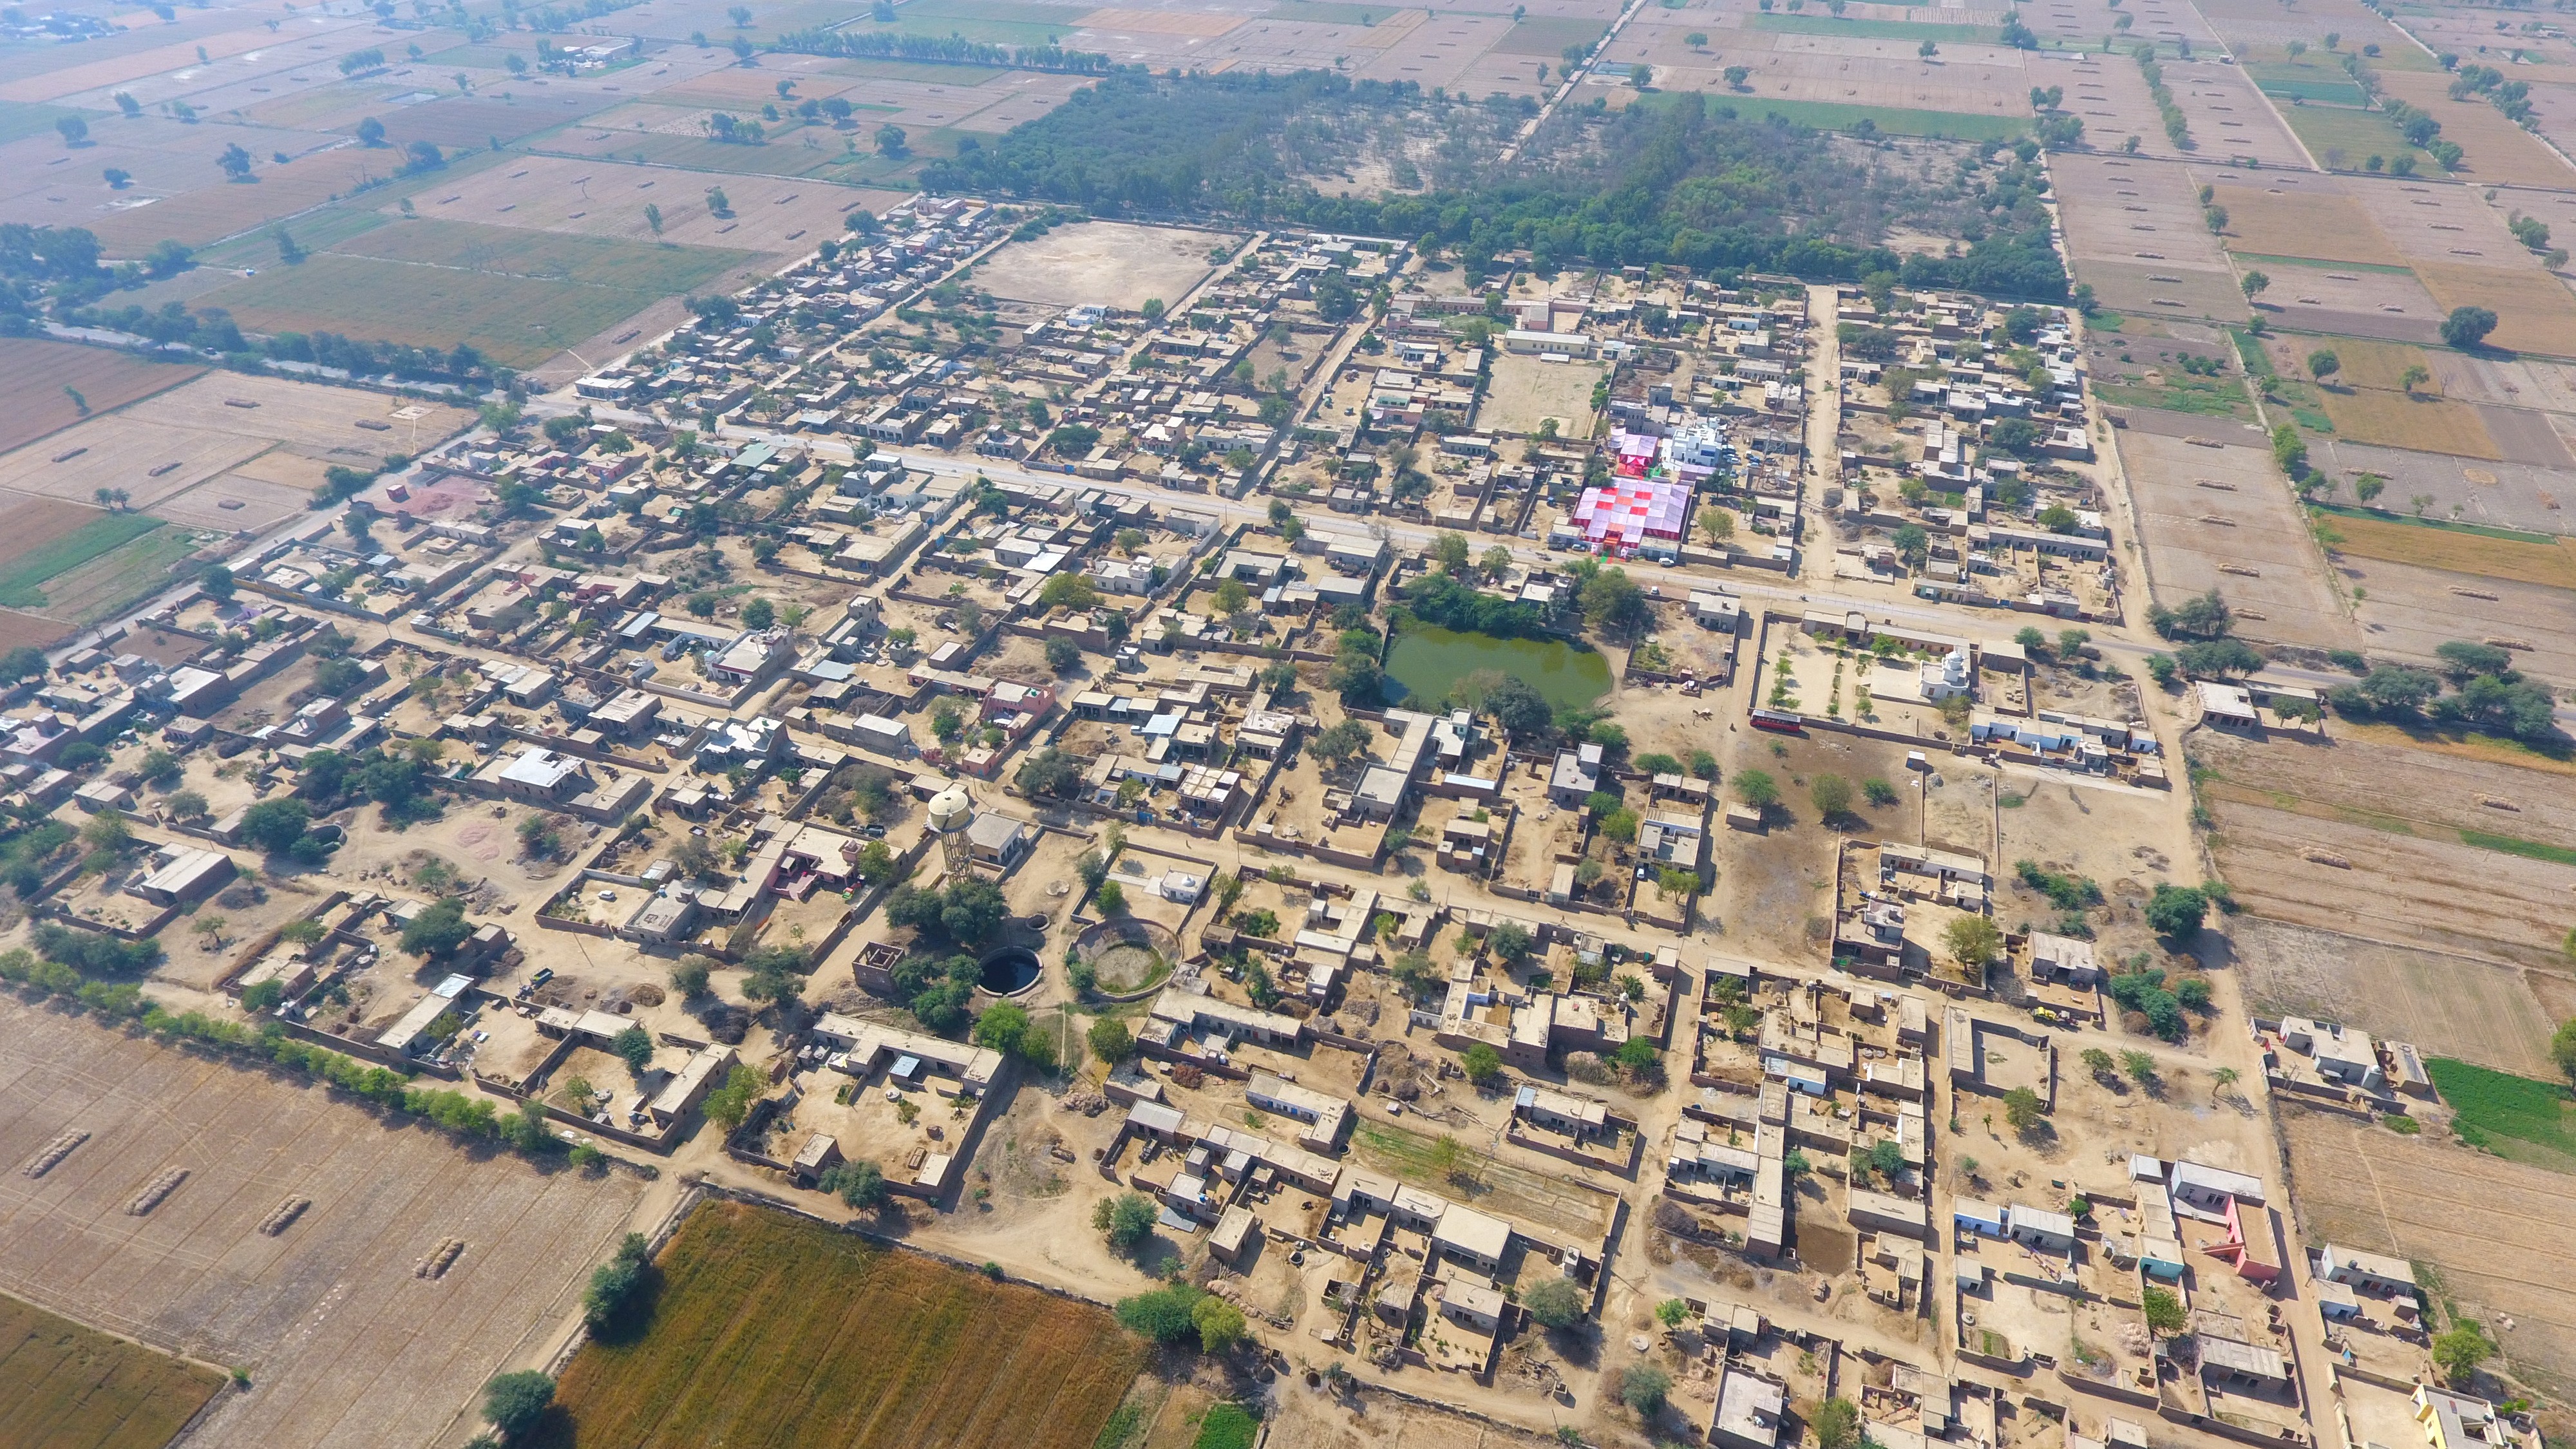 General 4000x2250 aerial view village farm landscape India